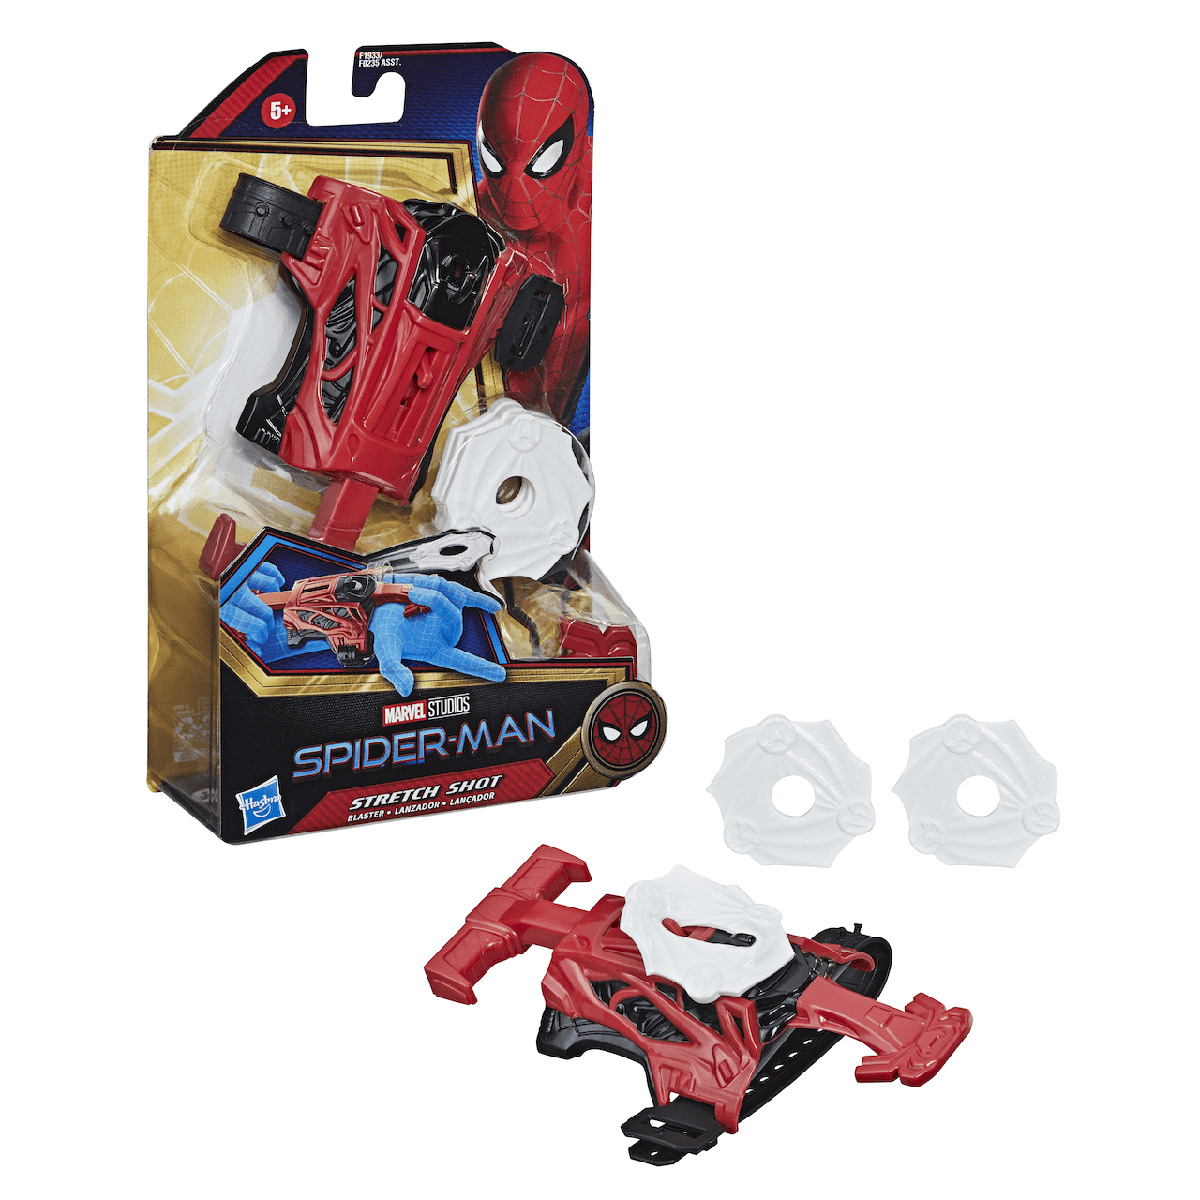 Spider-Man Hero Blaster Red and Black